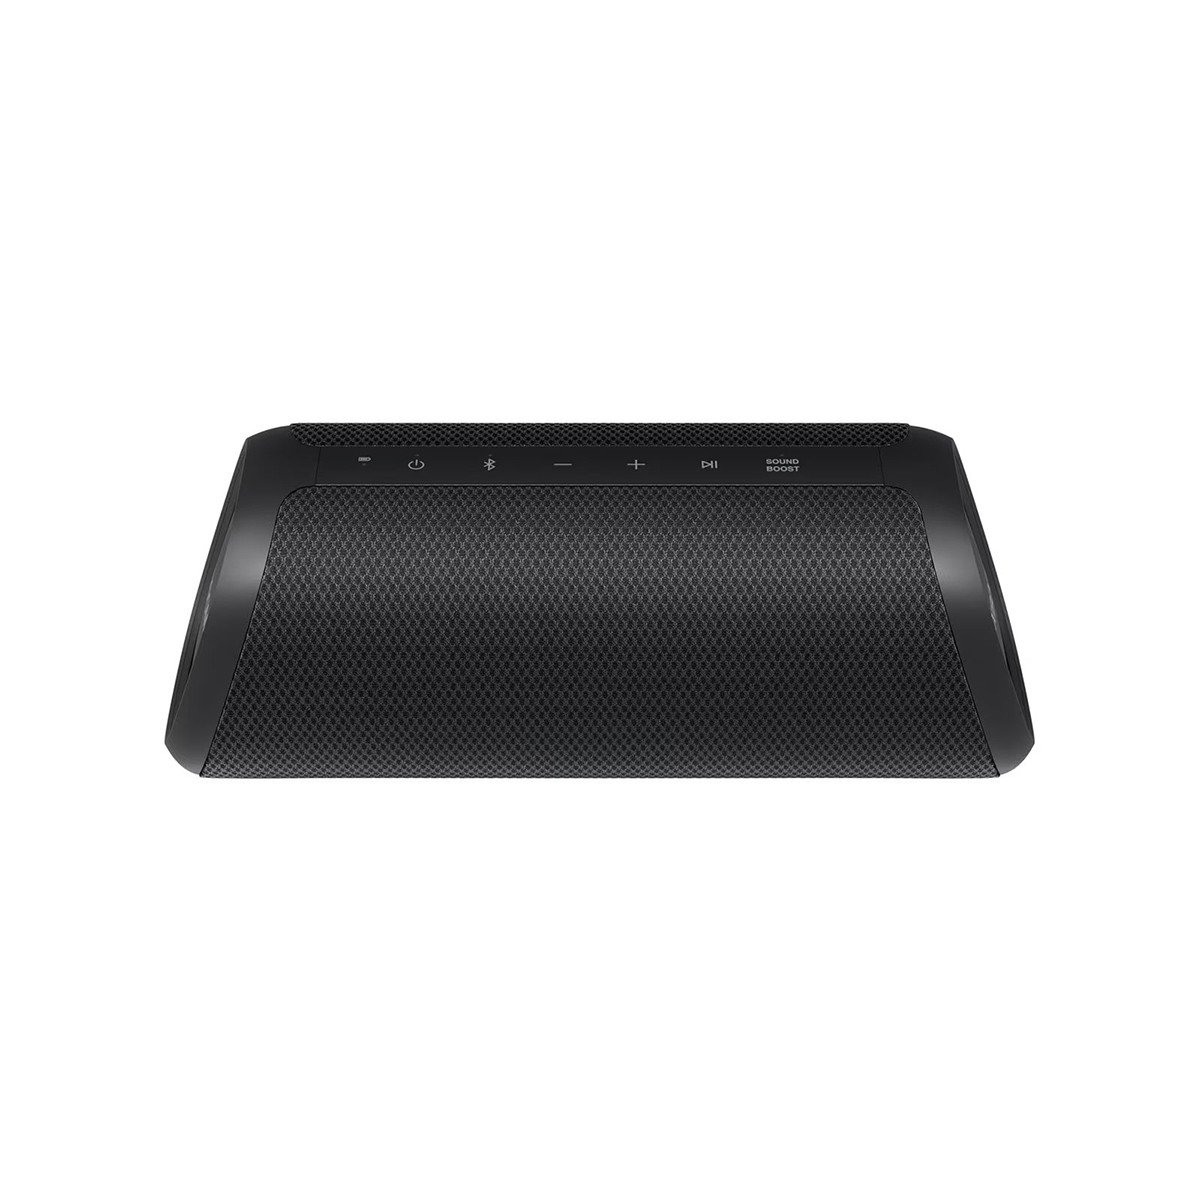 LG XBOOM Go Portable Bluetooth Speaker, Black - XG7QBK